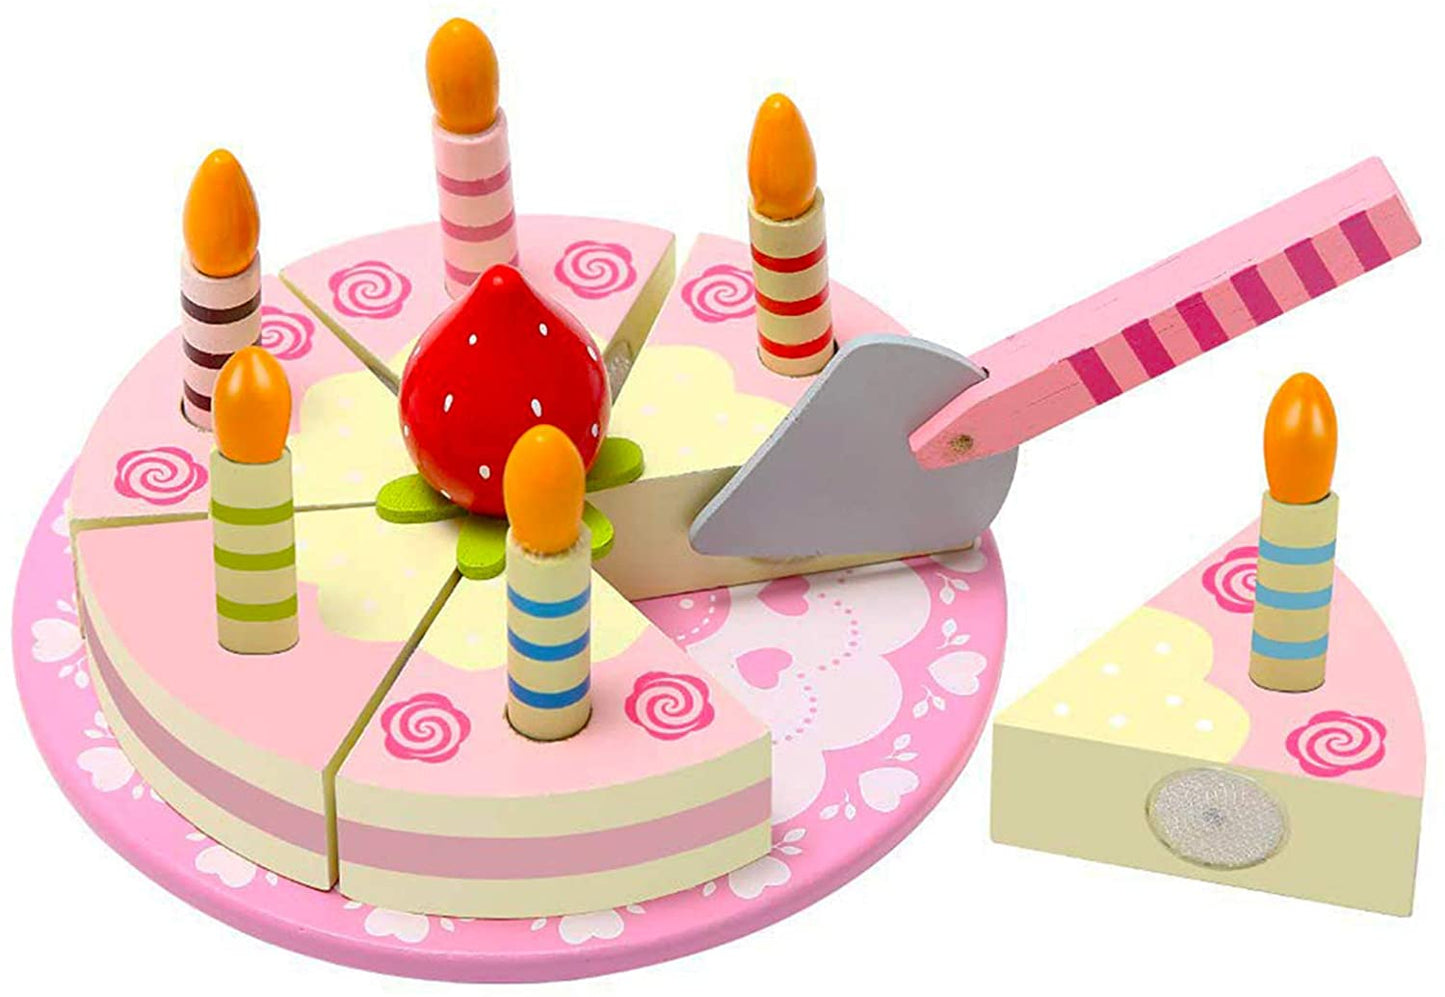 Wood Toy - Birthday Cake